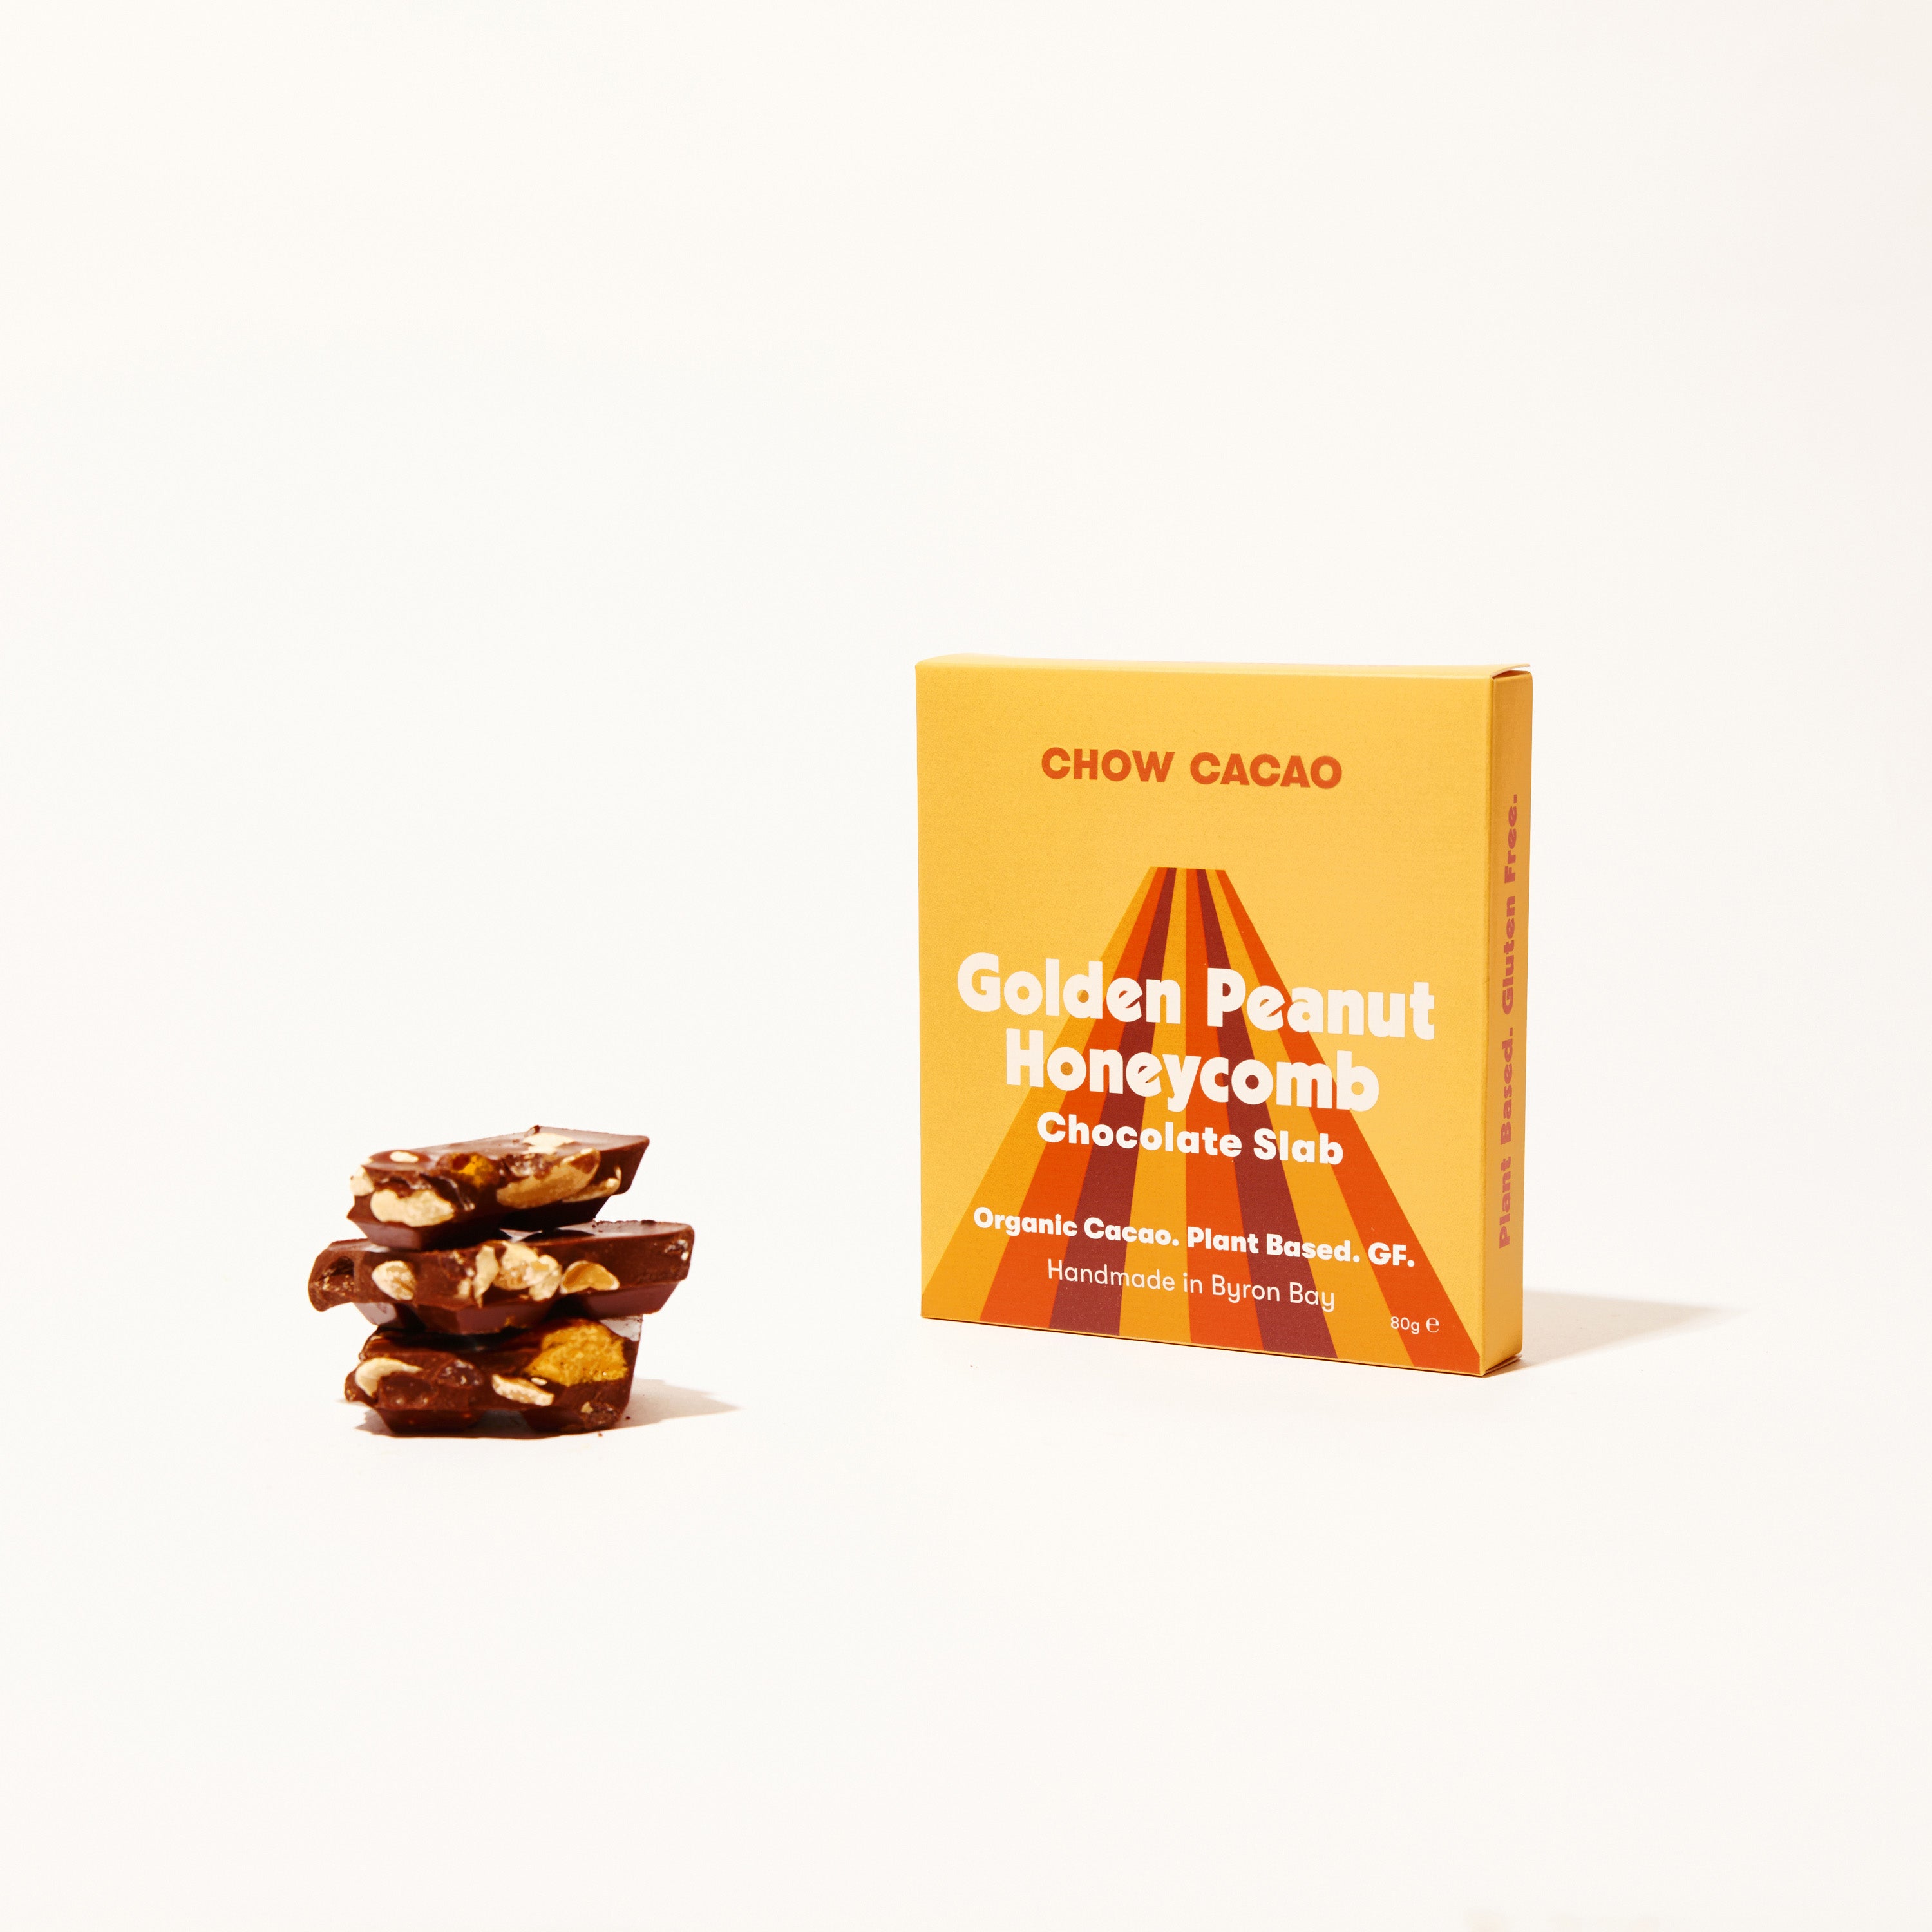 Chow Cacao Golden Peanut Honeycomb Chocolate Slab 80gms